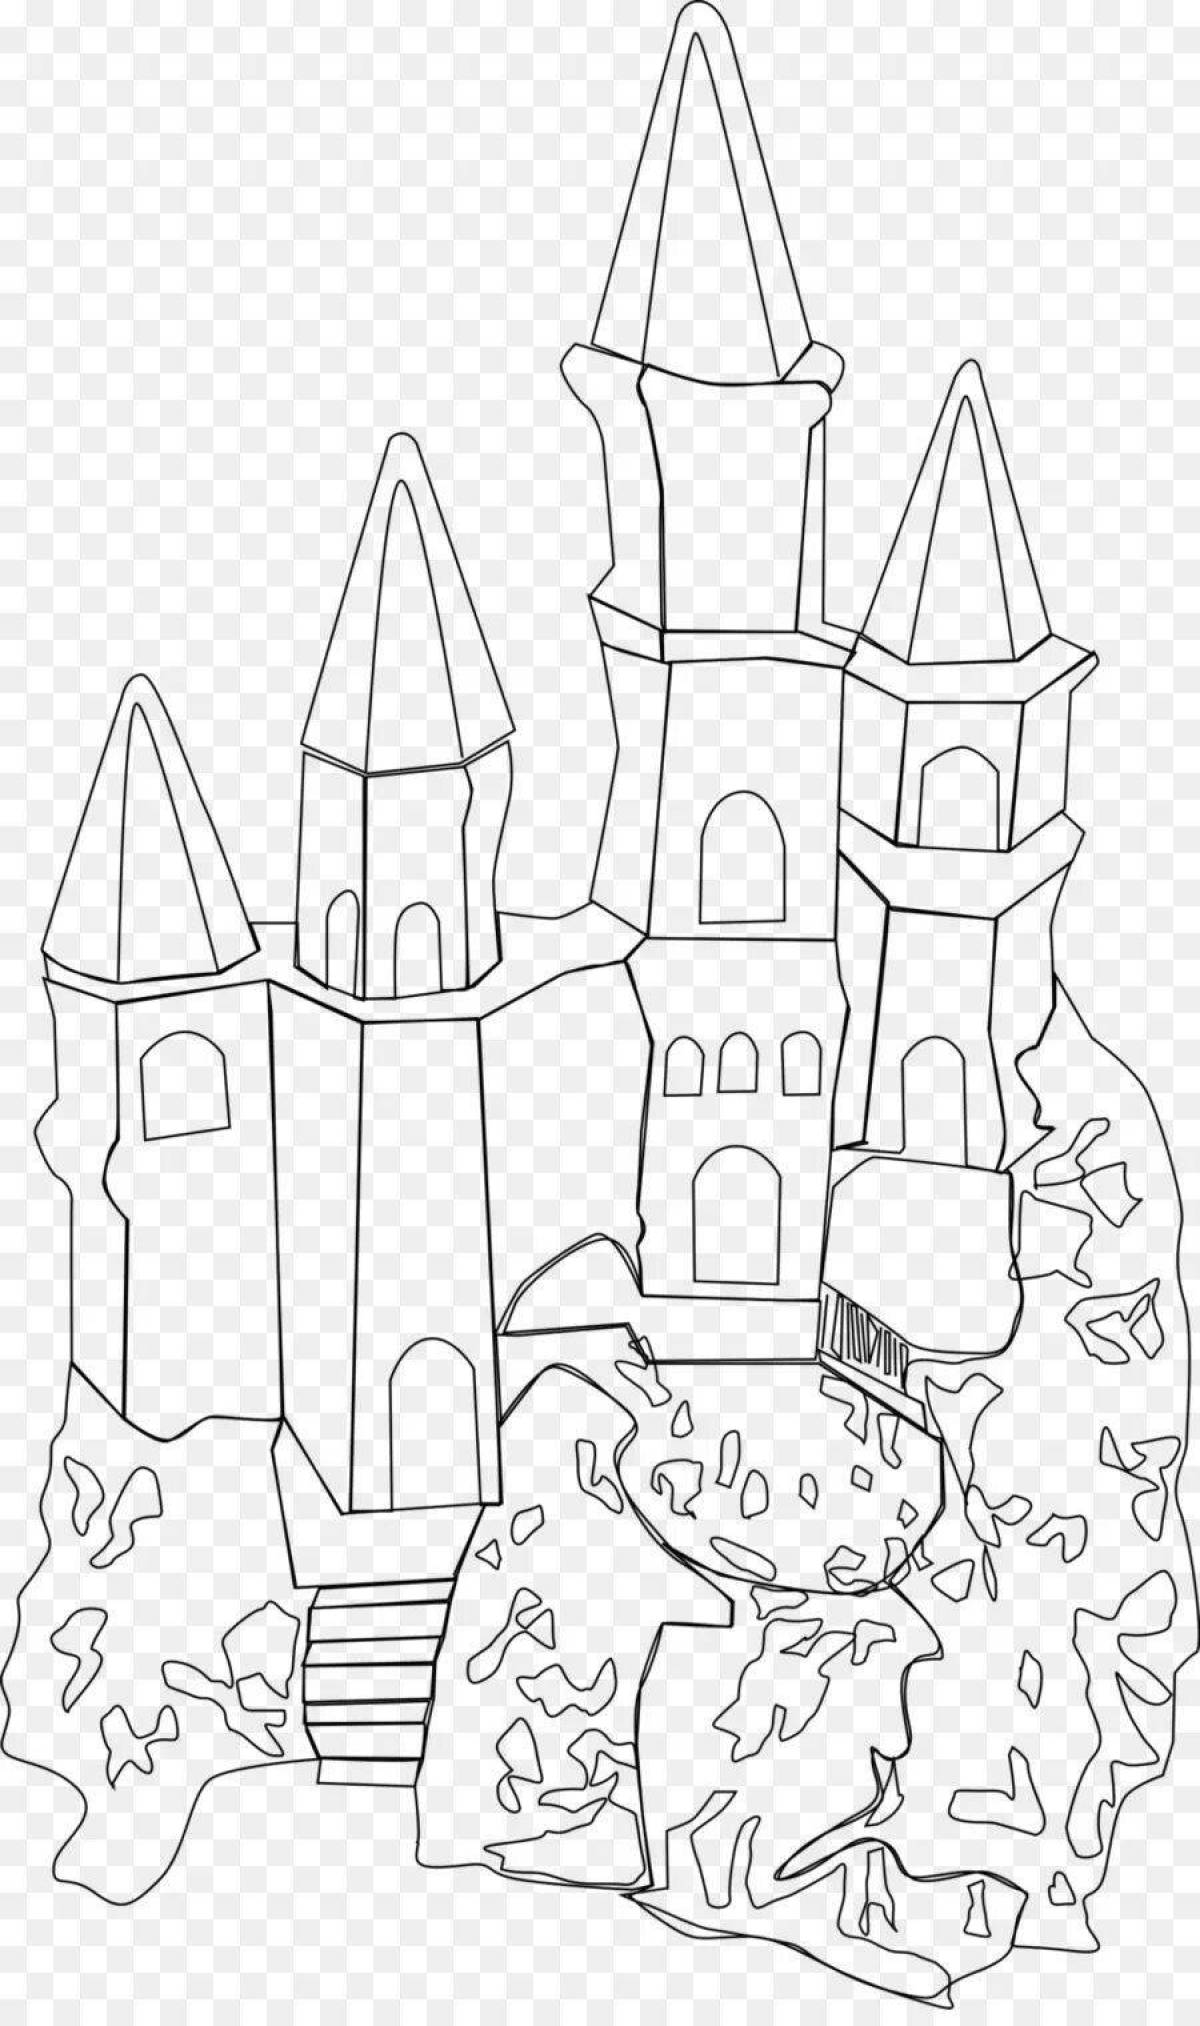 Snow Queen's mystical castle coloring page